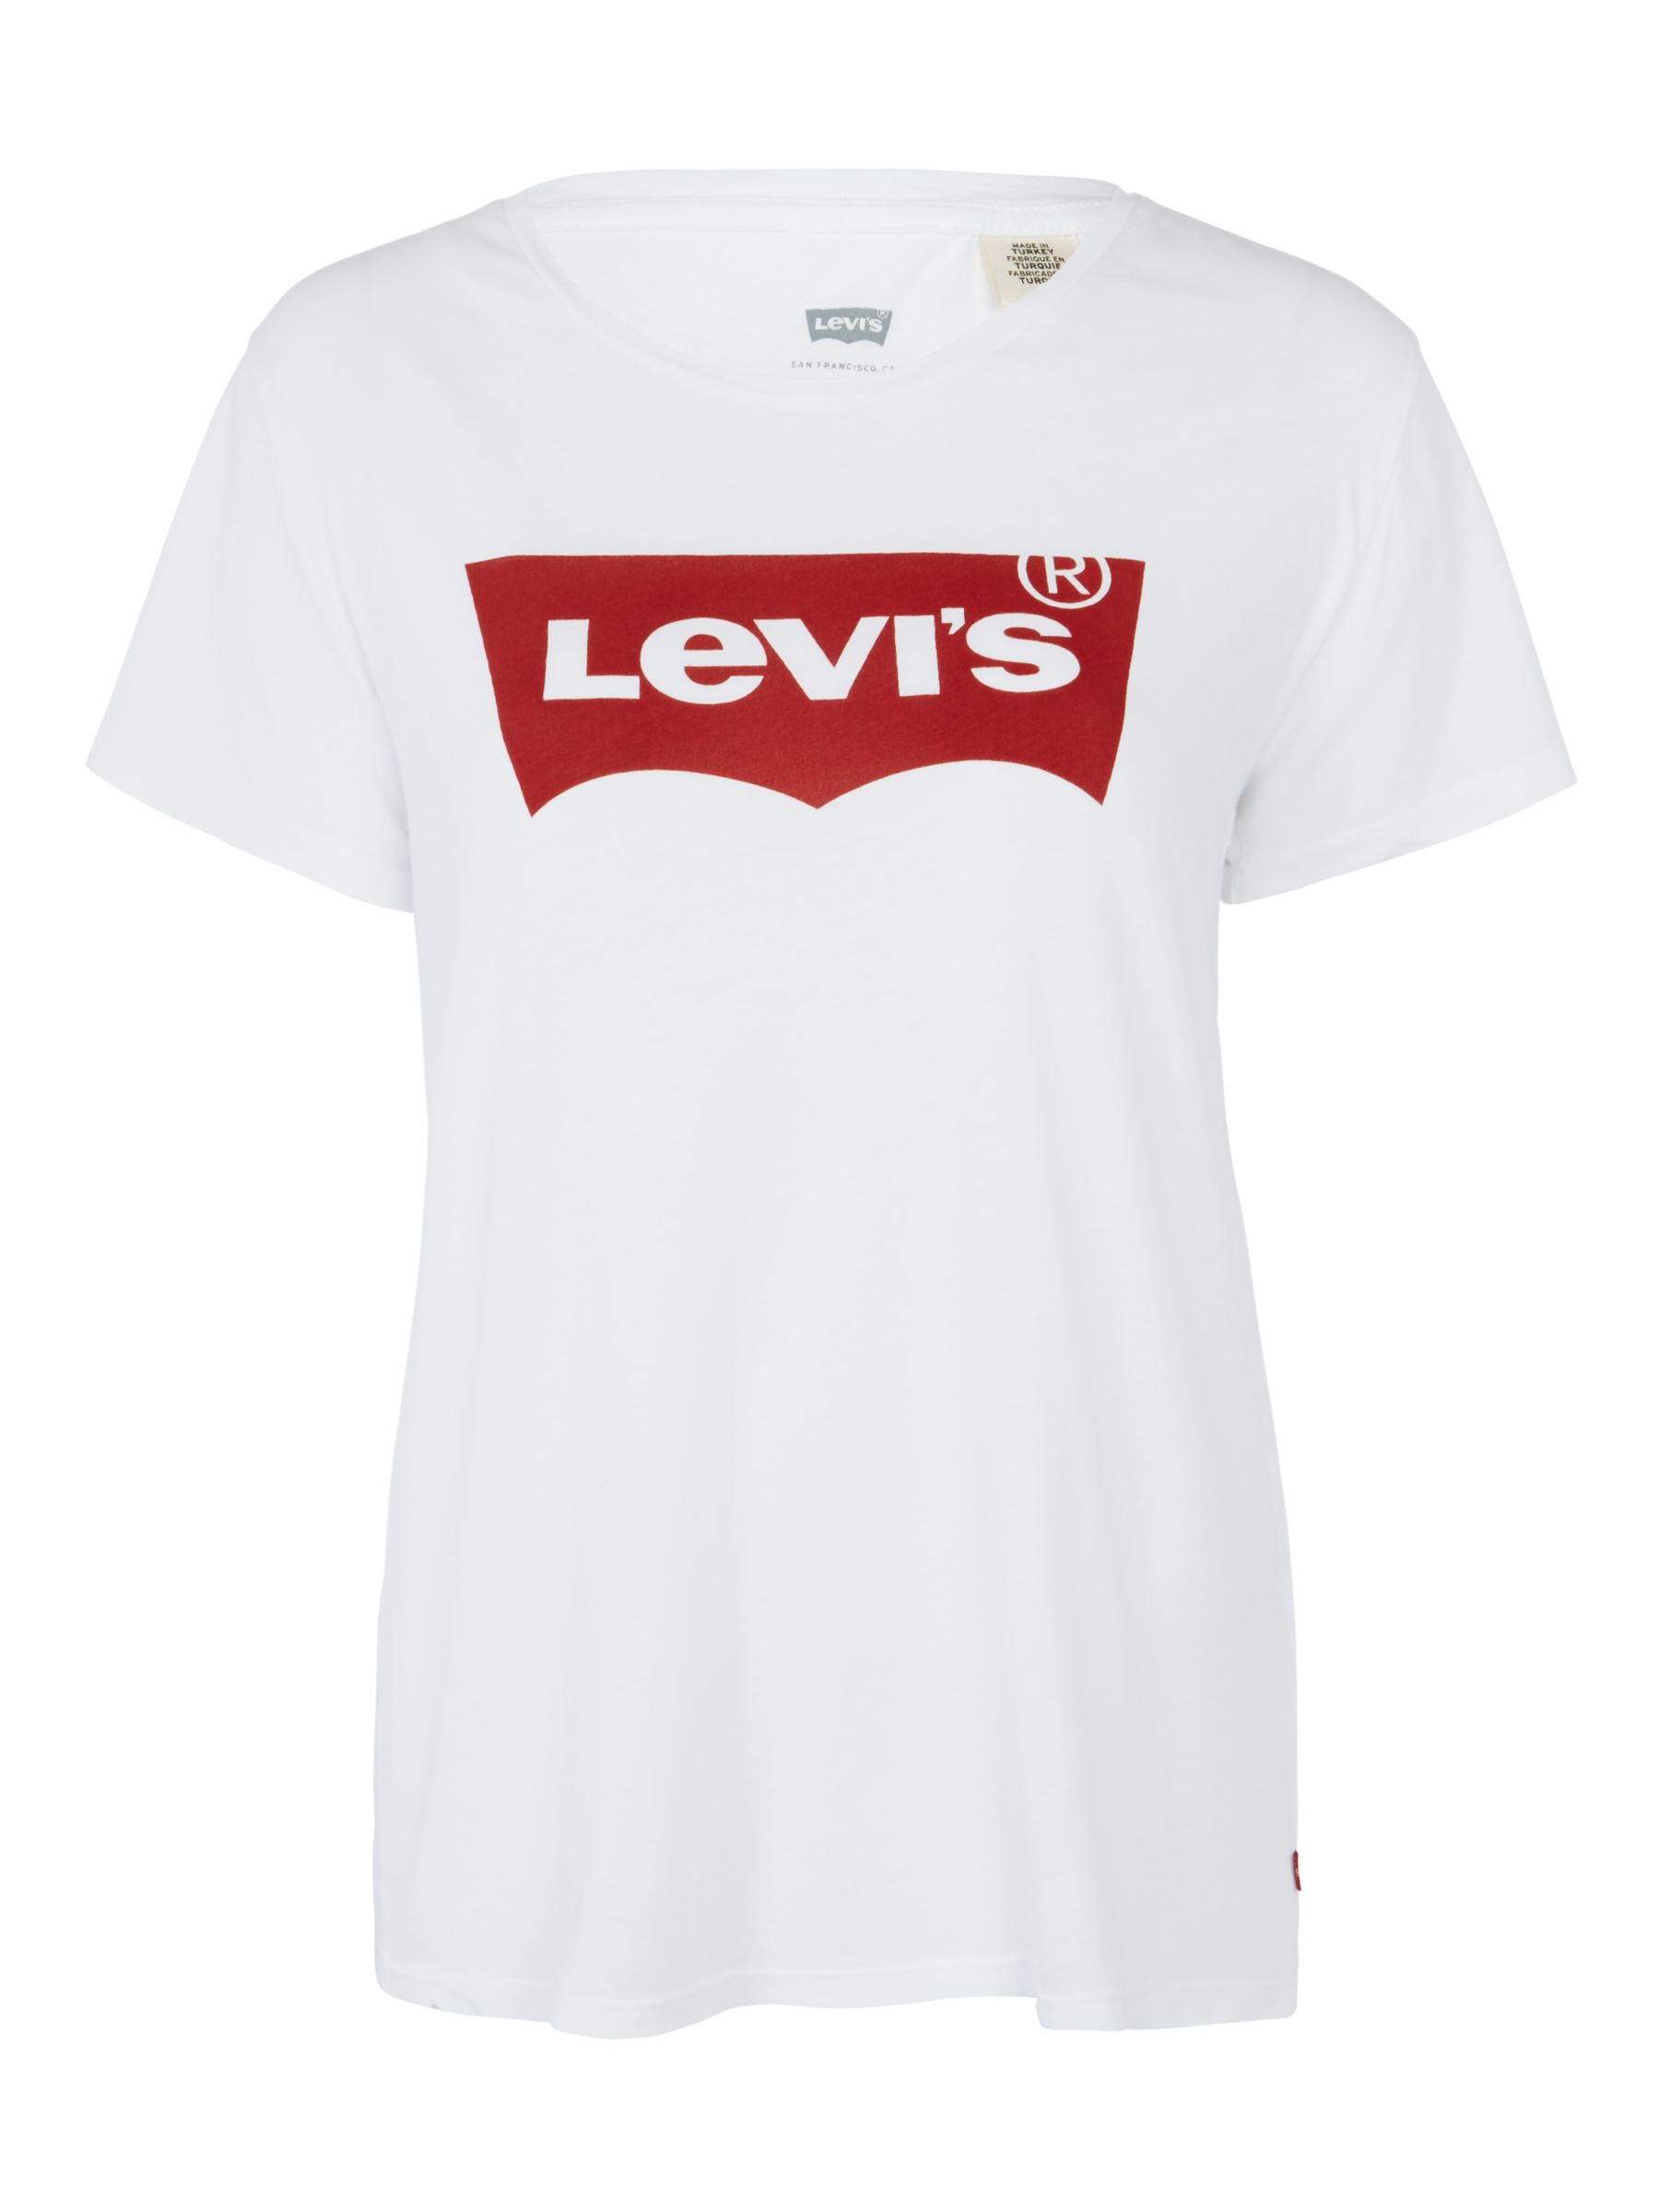 levi's white t shirt red logo